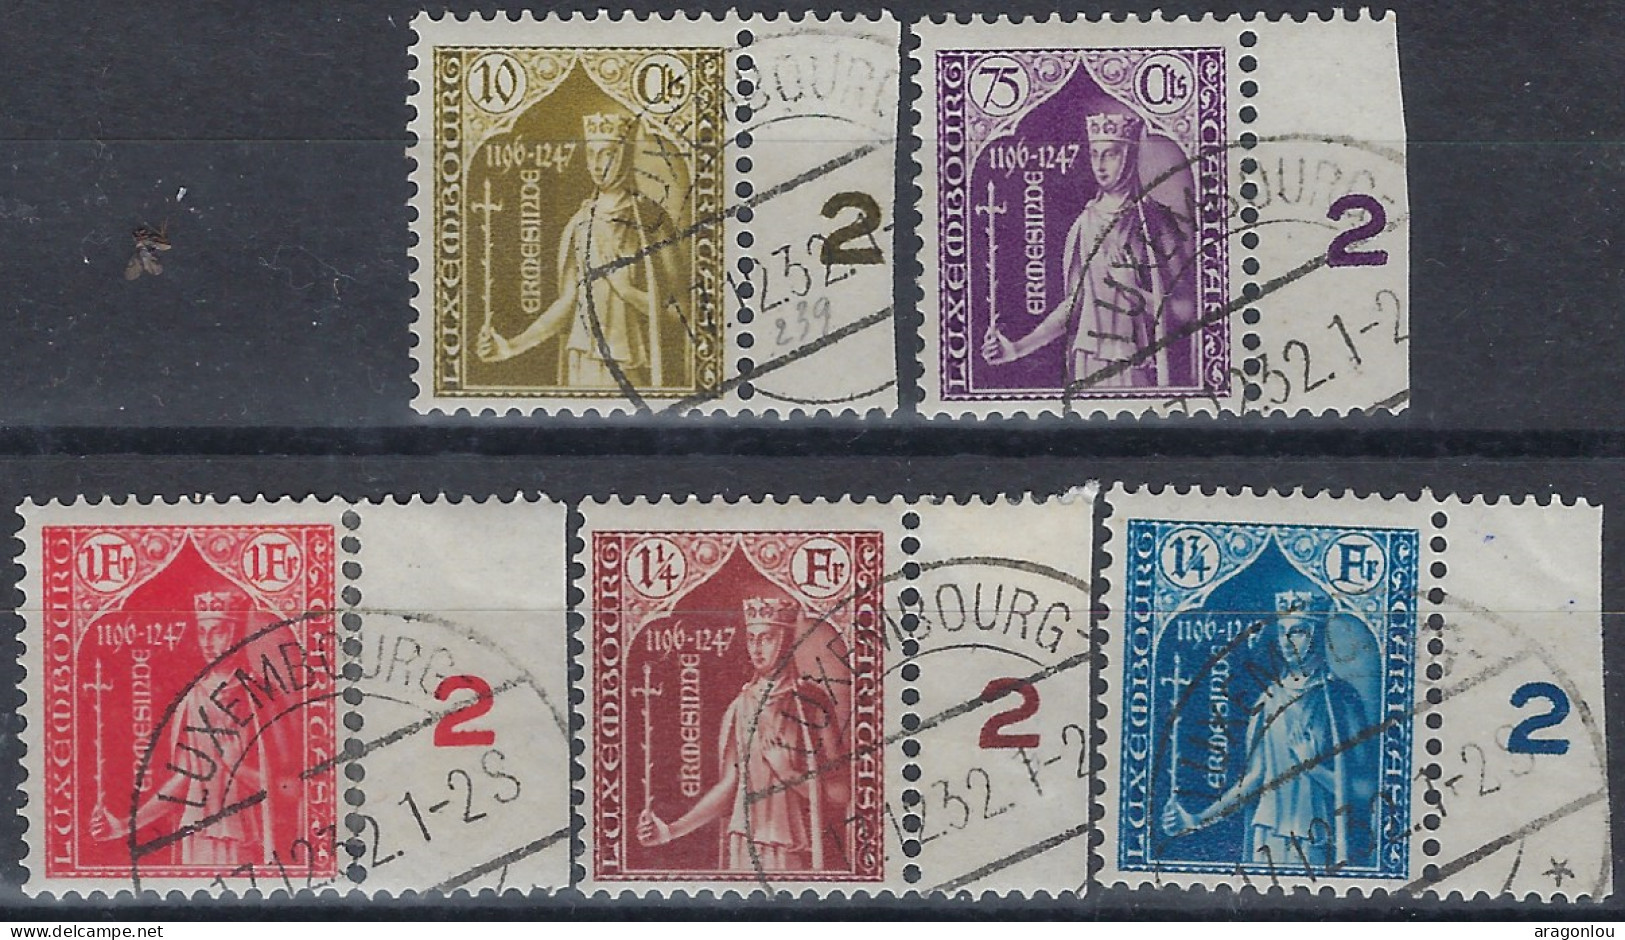 Luxembourg - Luxemburg - Timbres  1932  Série    Comtesse   Ermesinde    Caritas °   VC.140,- - Gebruikt